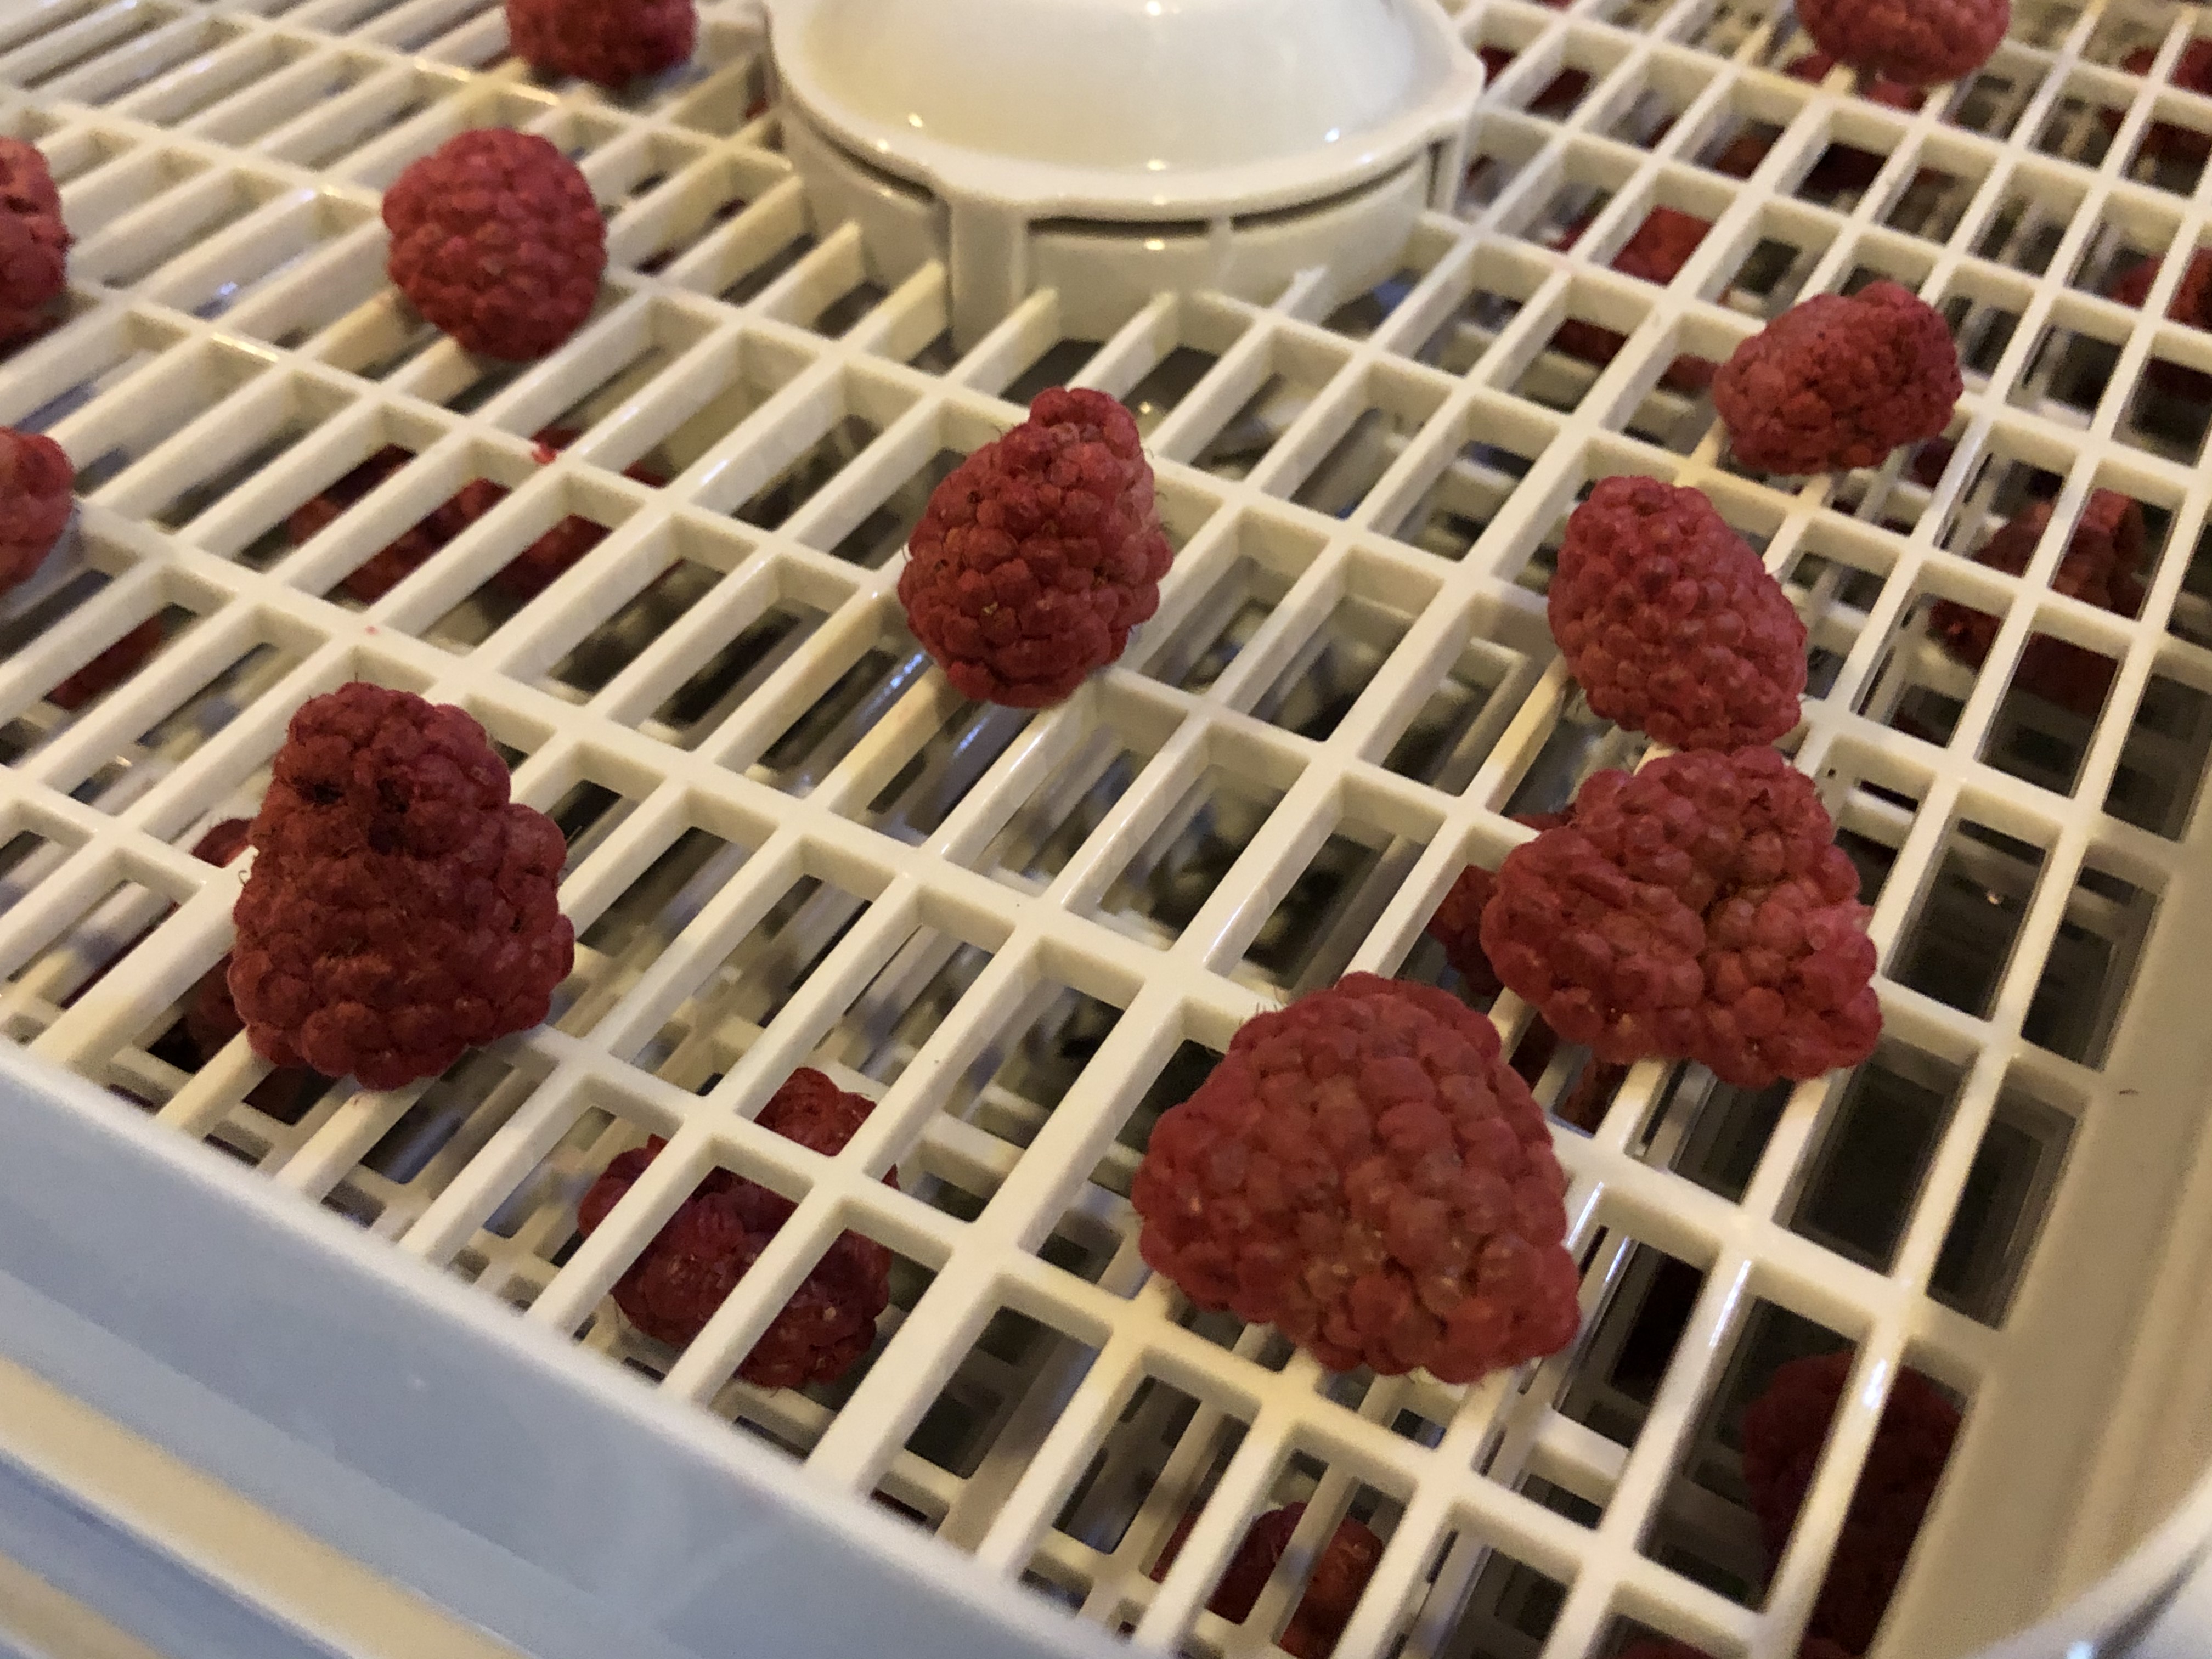 Raspberries on Dehydrator Trays